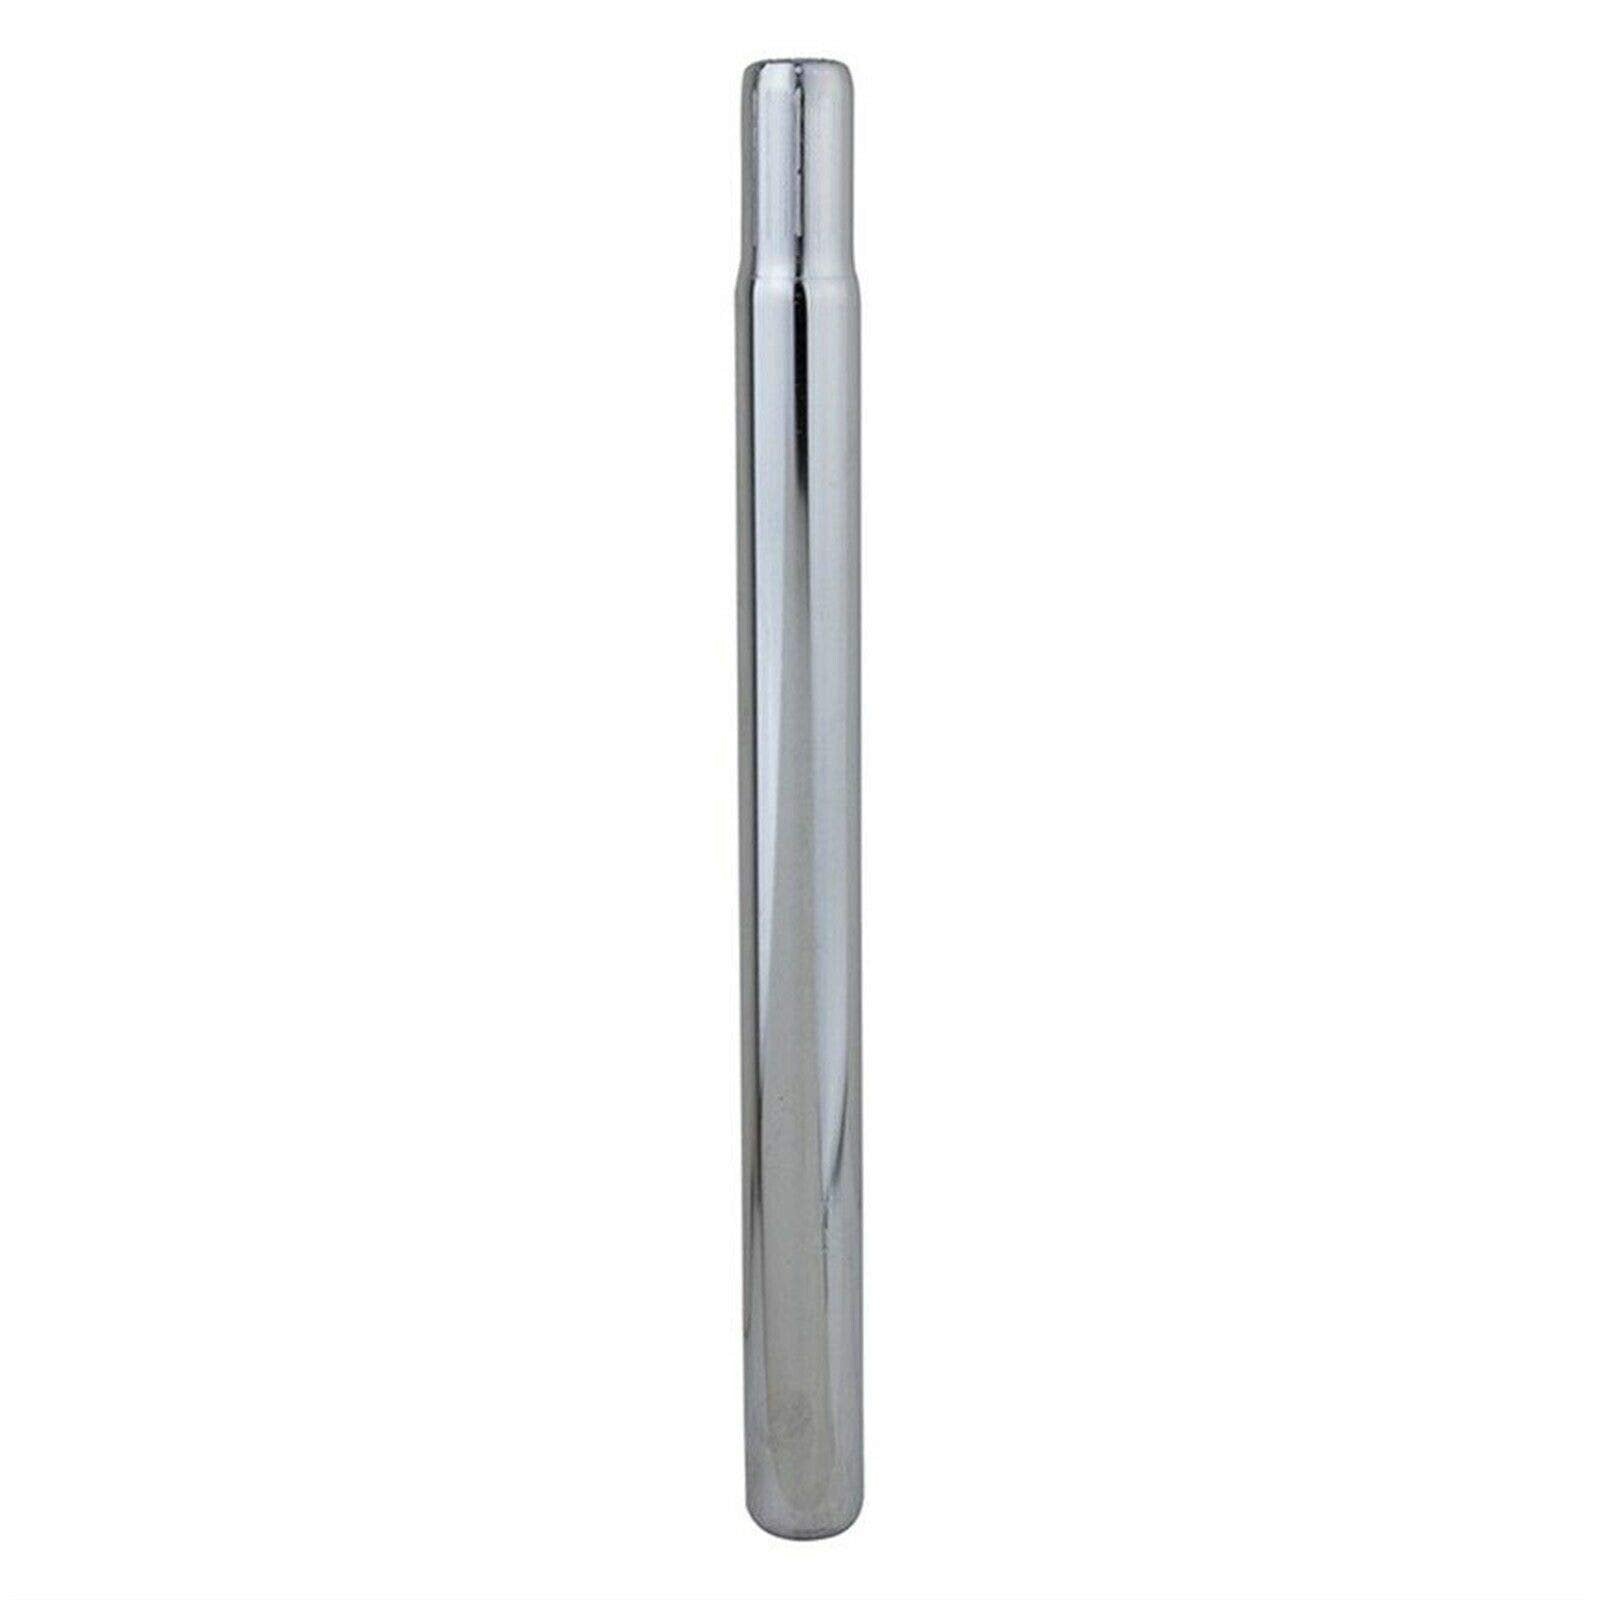 Sunlite Steel Pillar Seatpost, 16 x 7/8", Chrome Plated